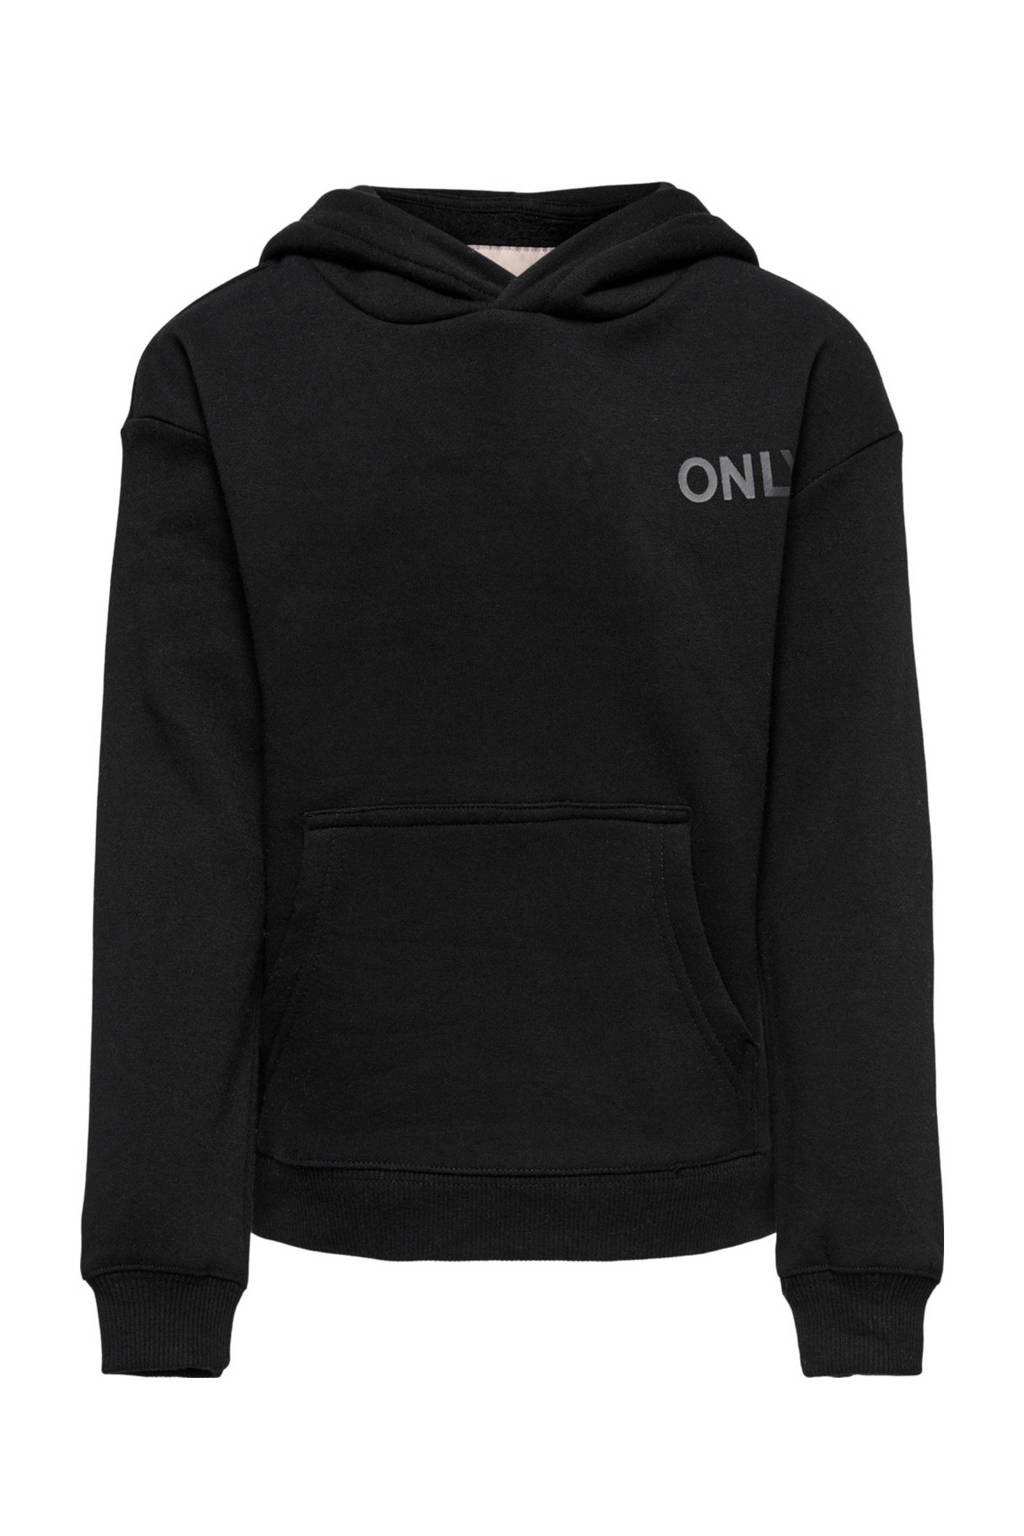 KIDS ONLY GIRL hoodie KONNEVER met logo zwart